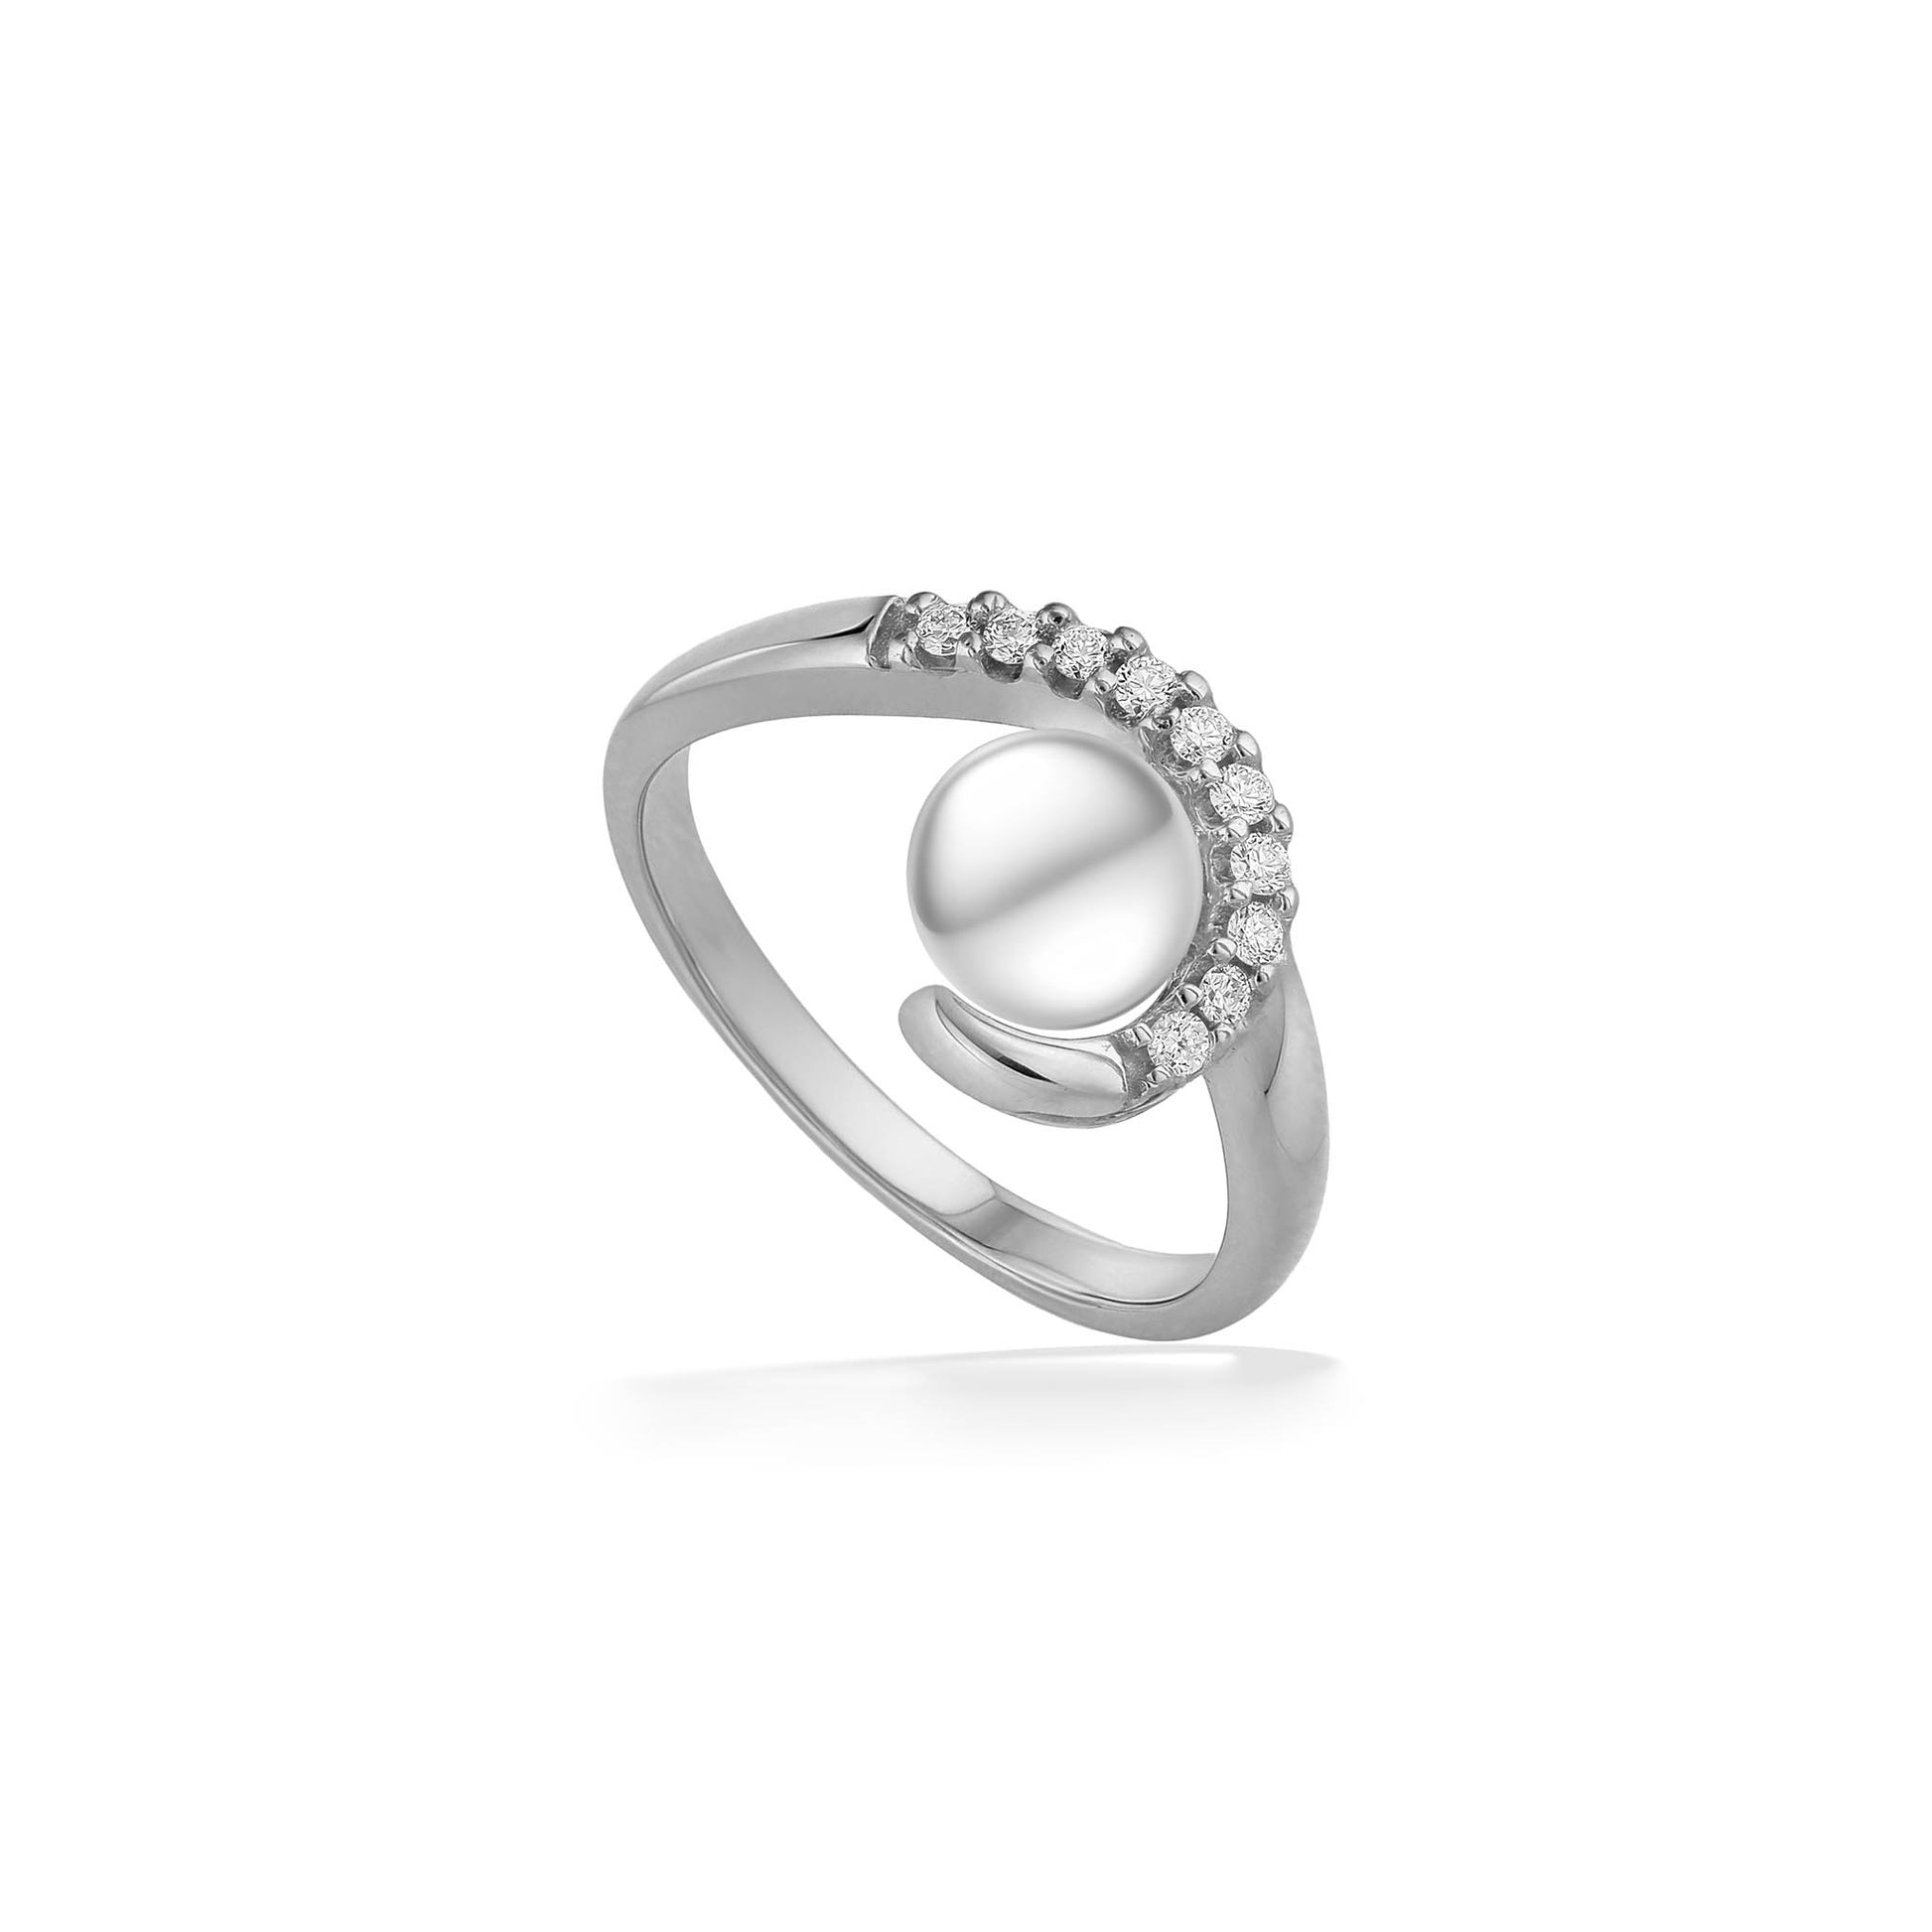 02017 - 14K White Gold - Hook Diamond Ring, Size 7